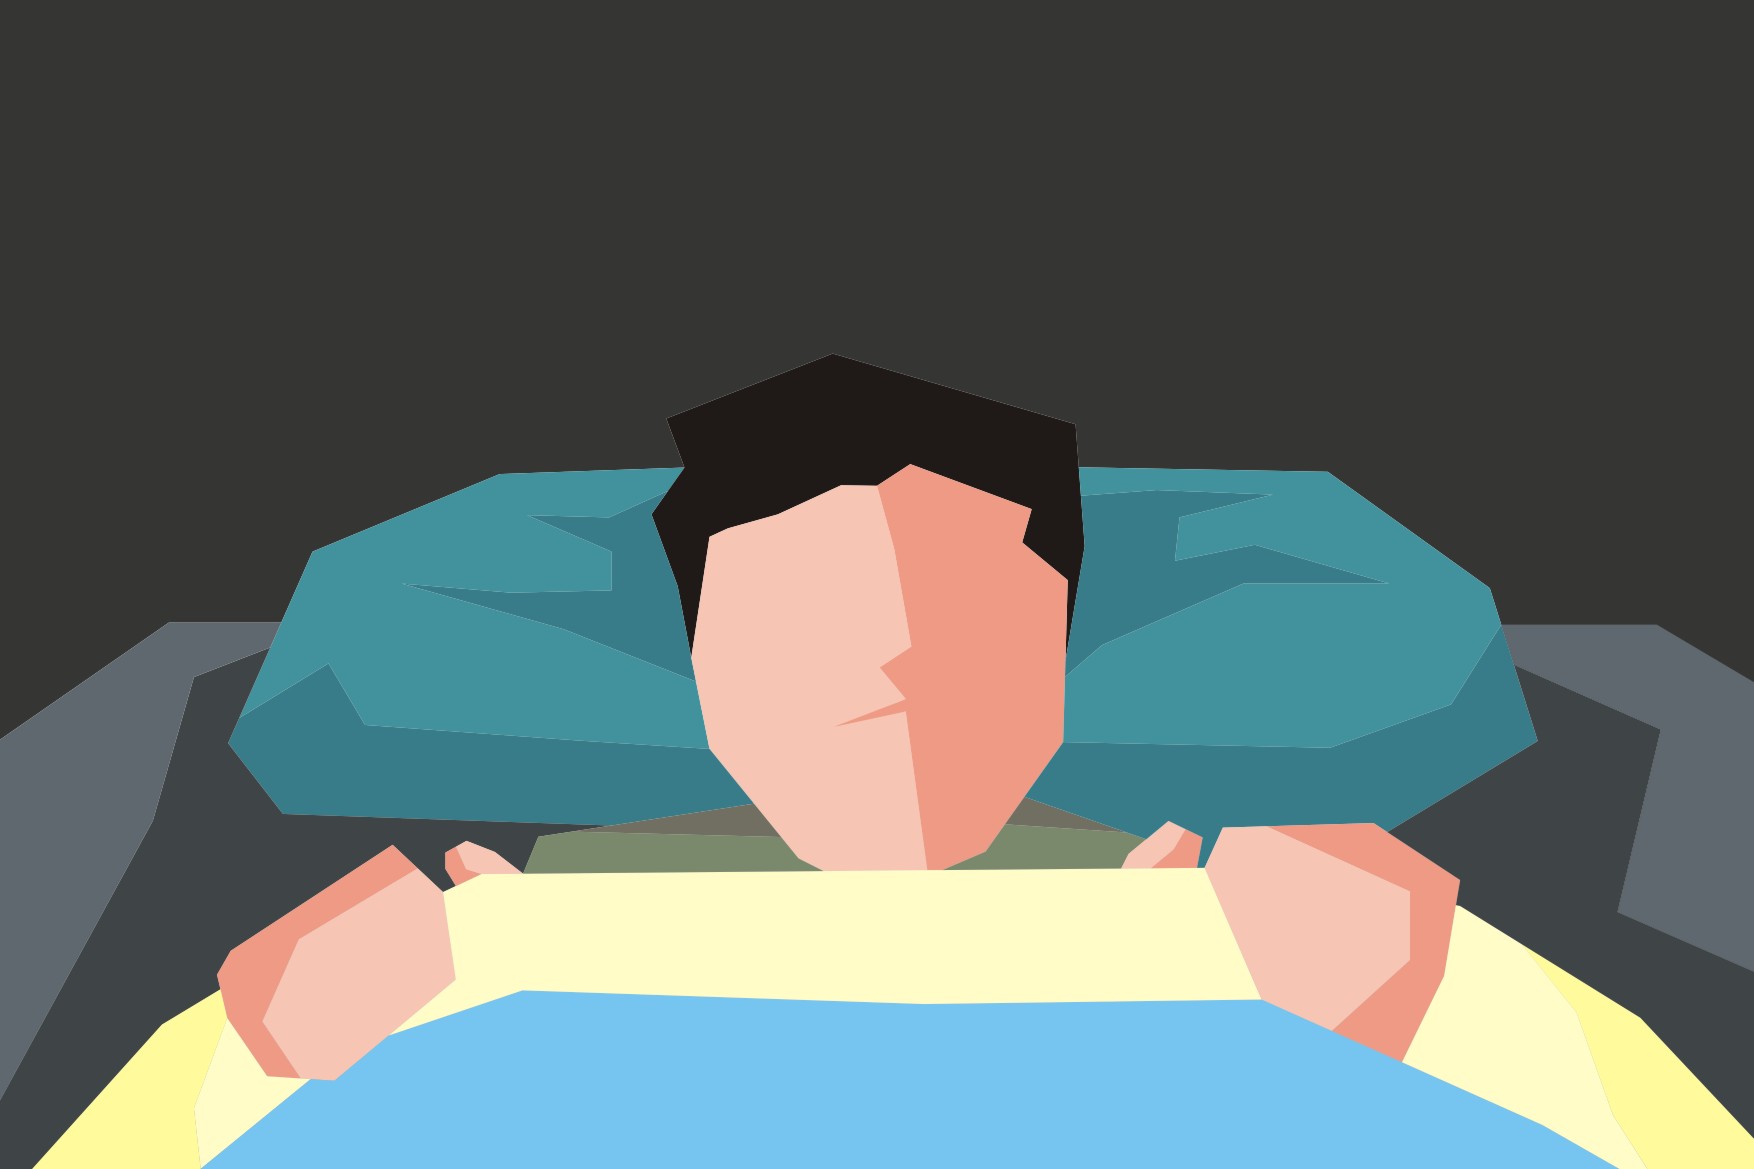 Ternyata tidur tanpa menggunakan bantal juga ada manfaatnya lho!